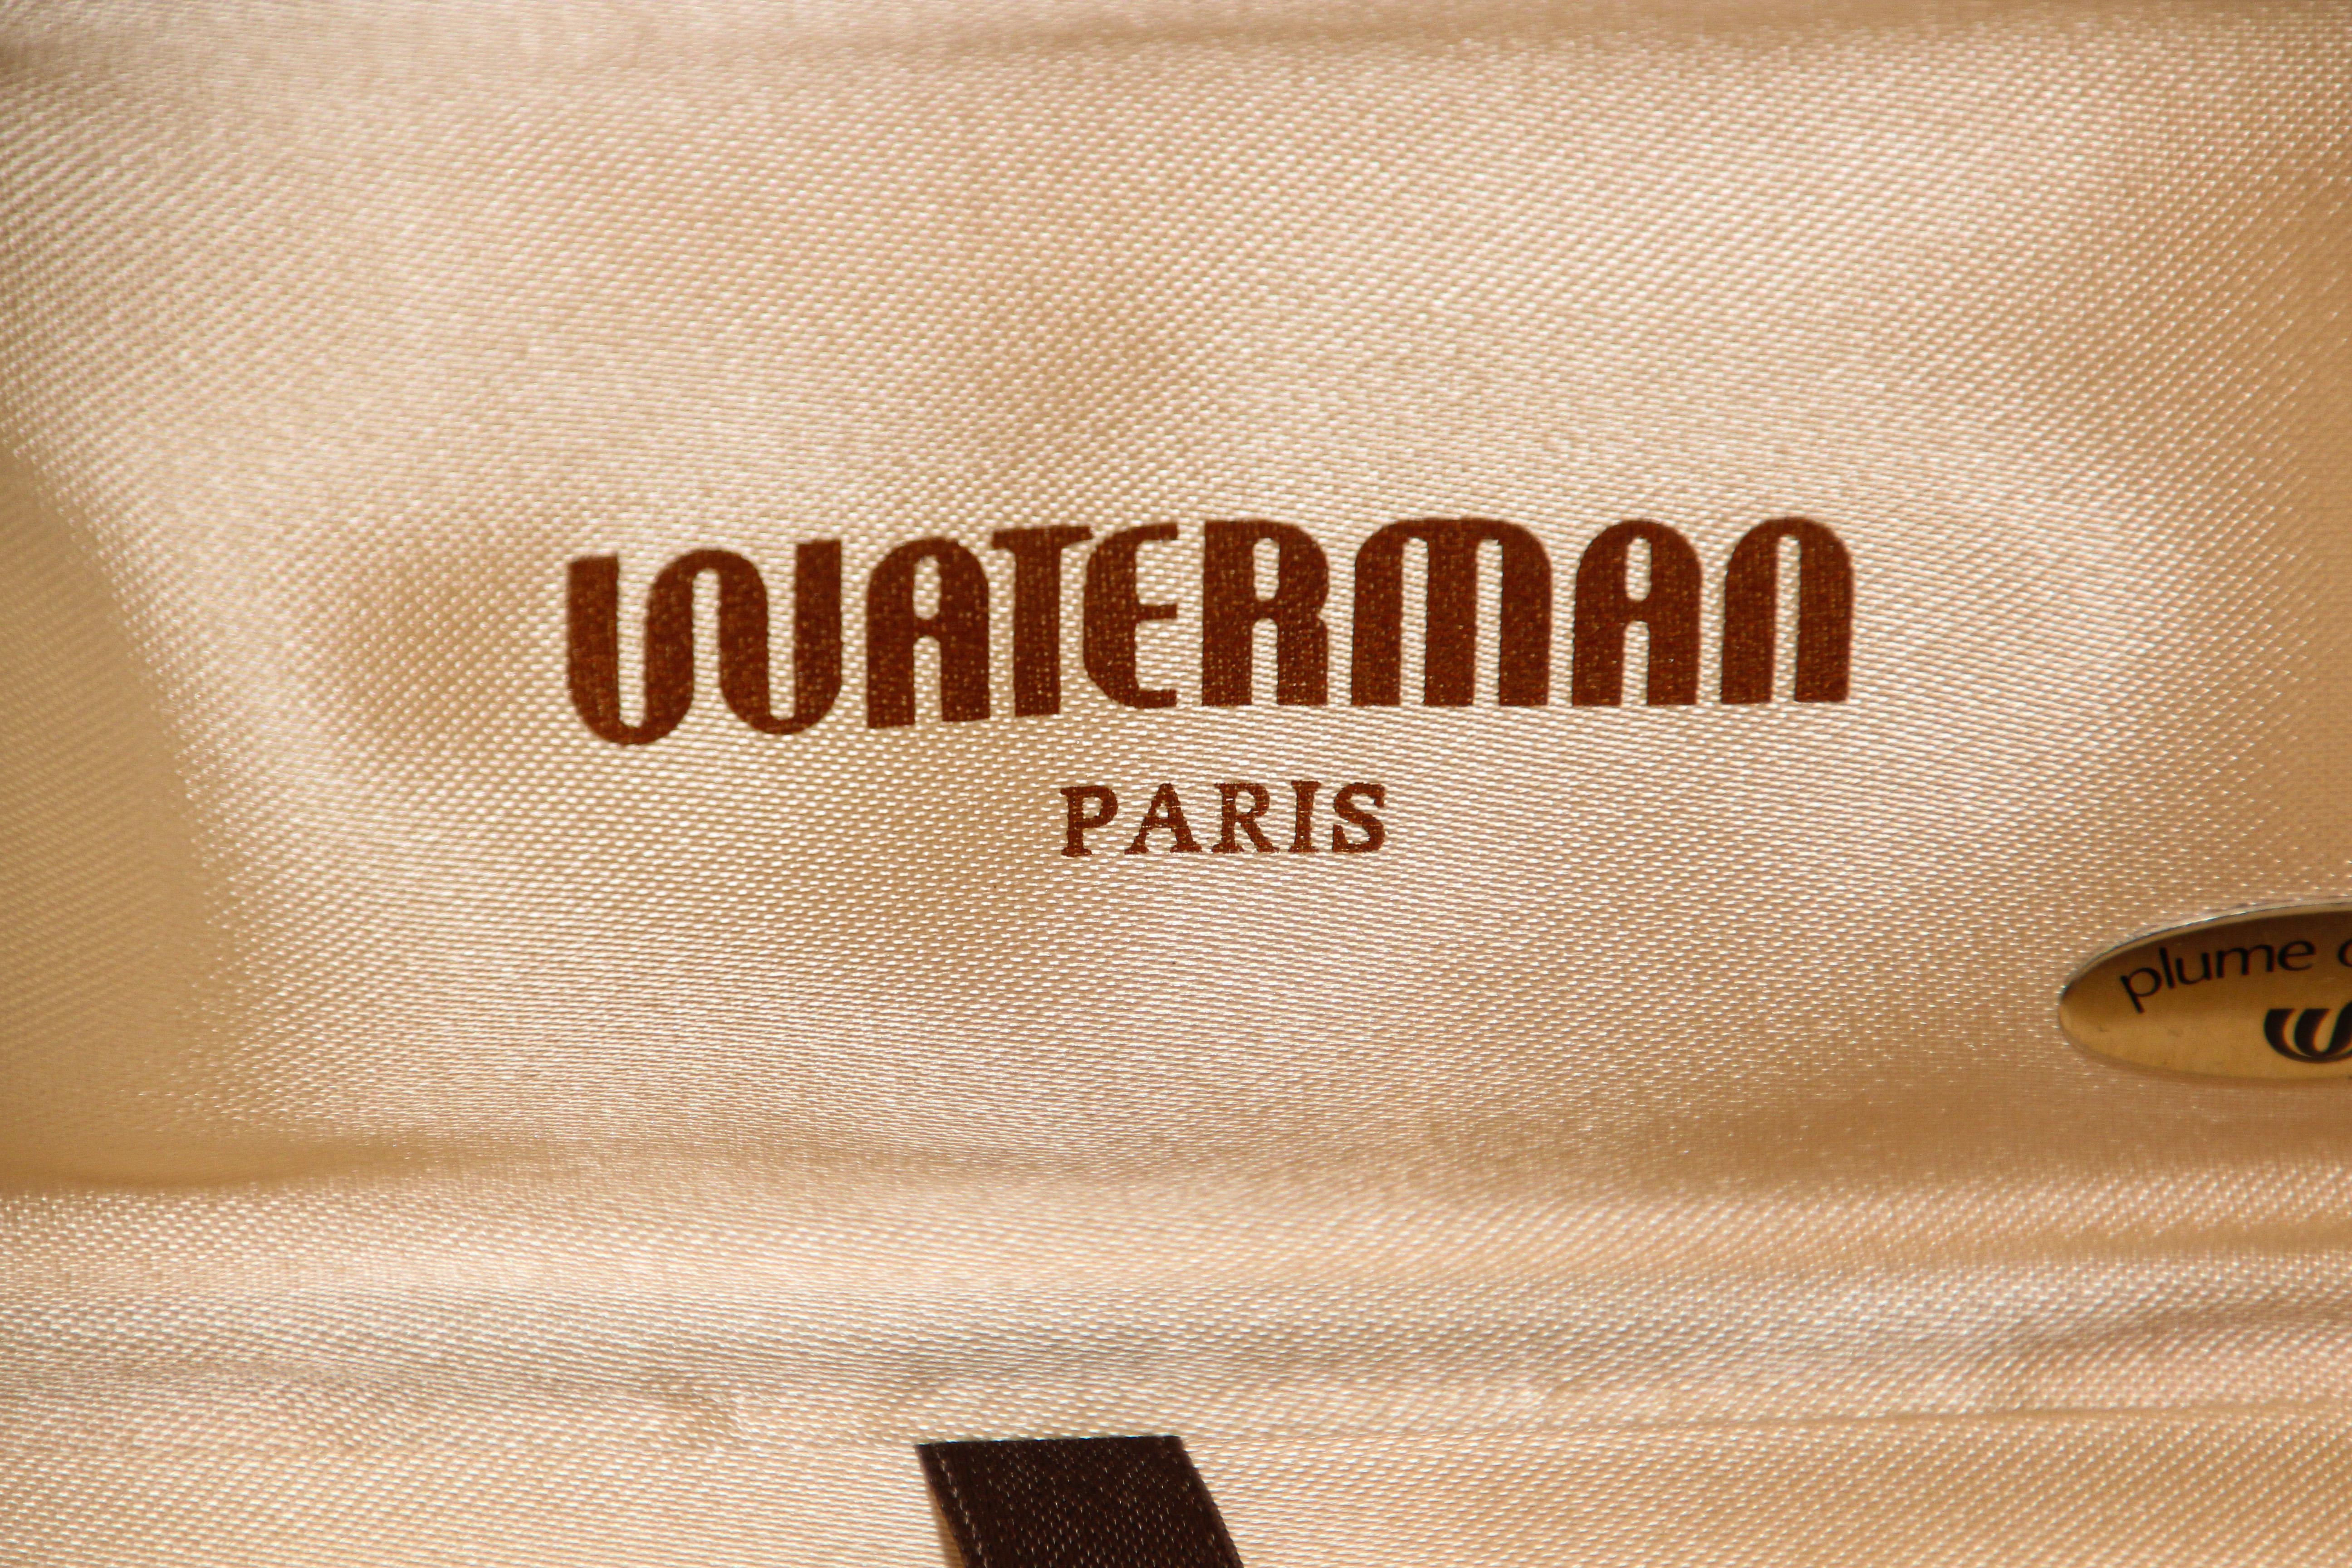 waterman paris pen